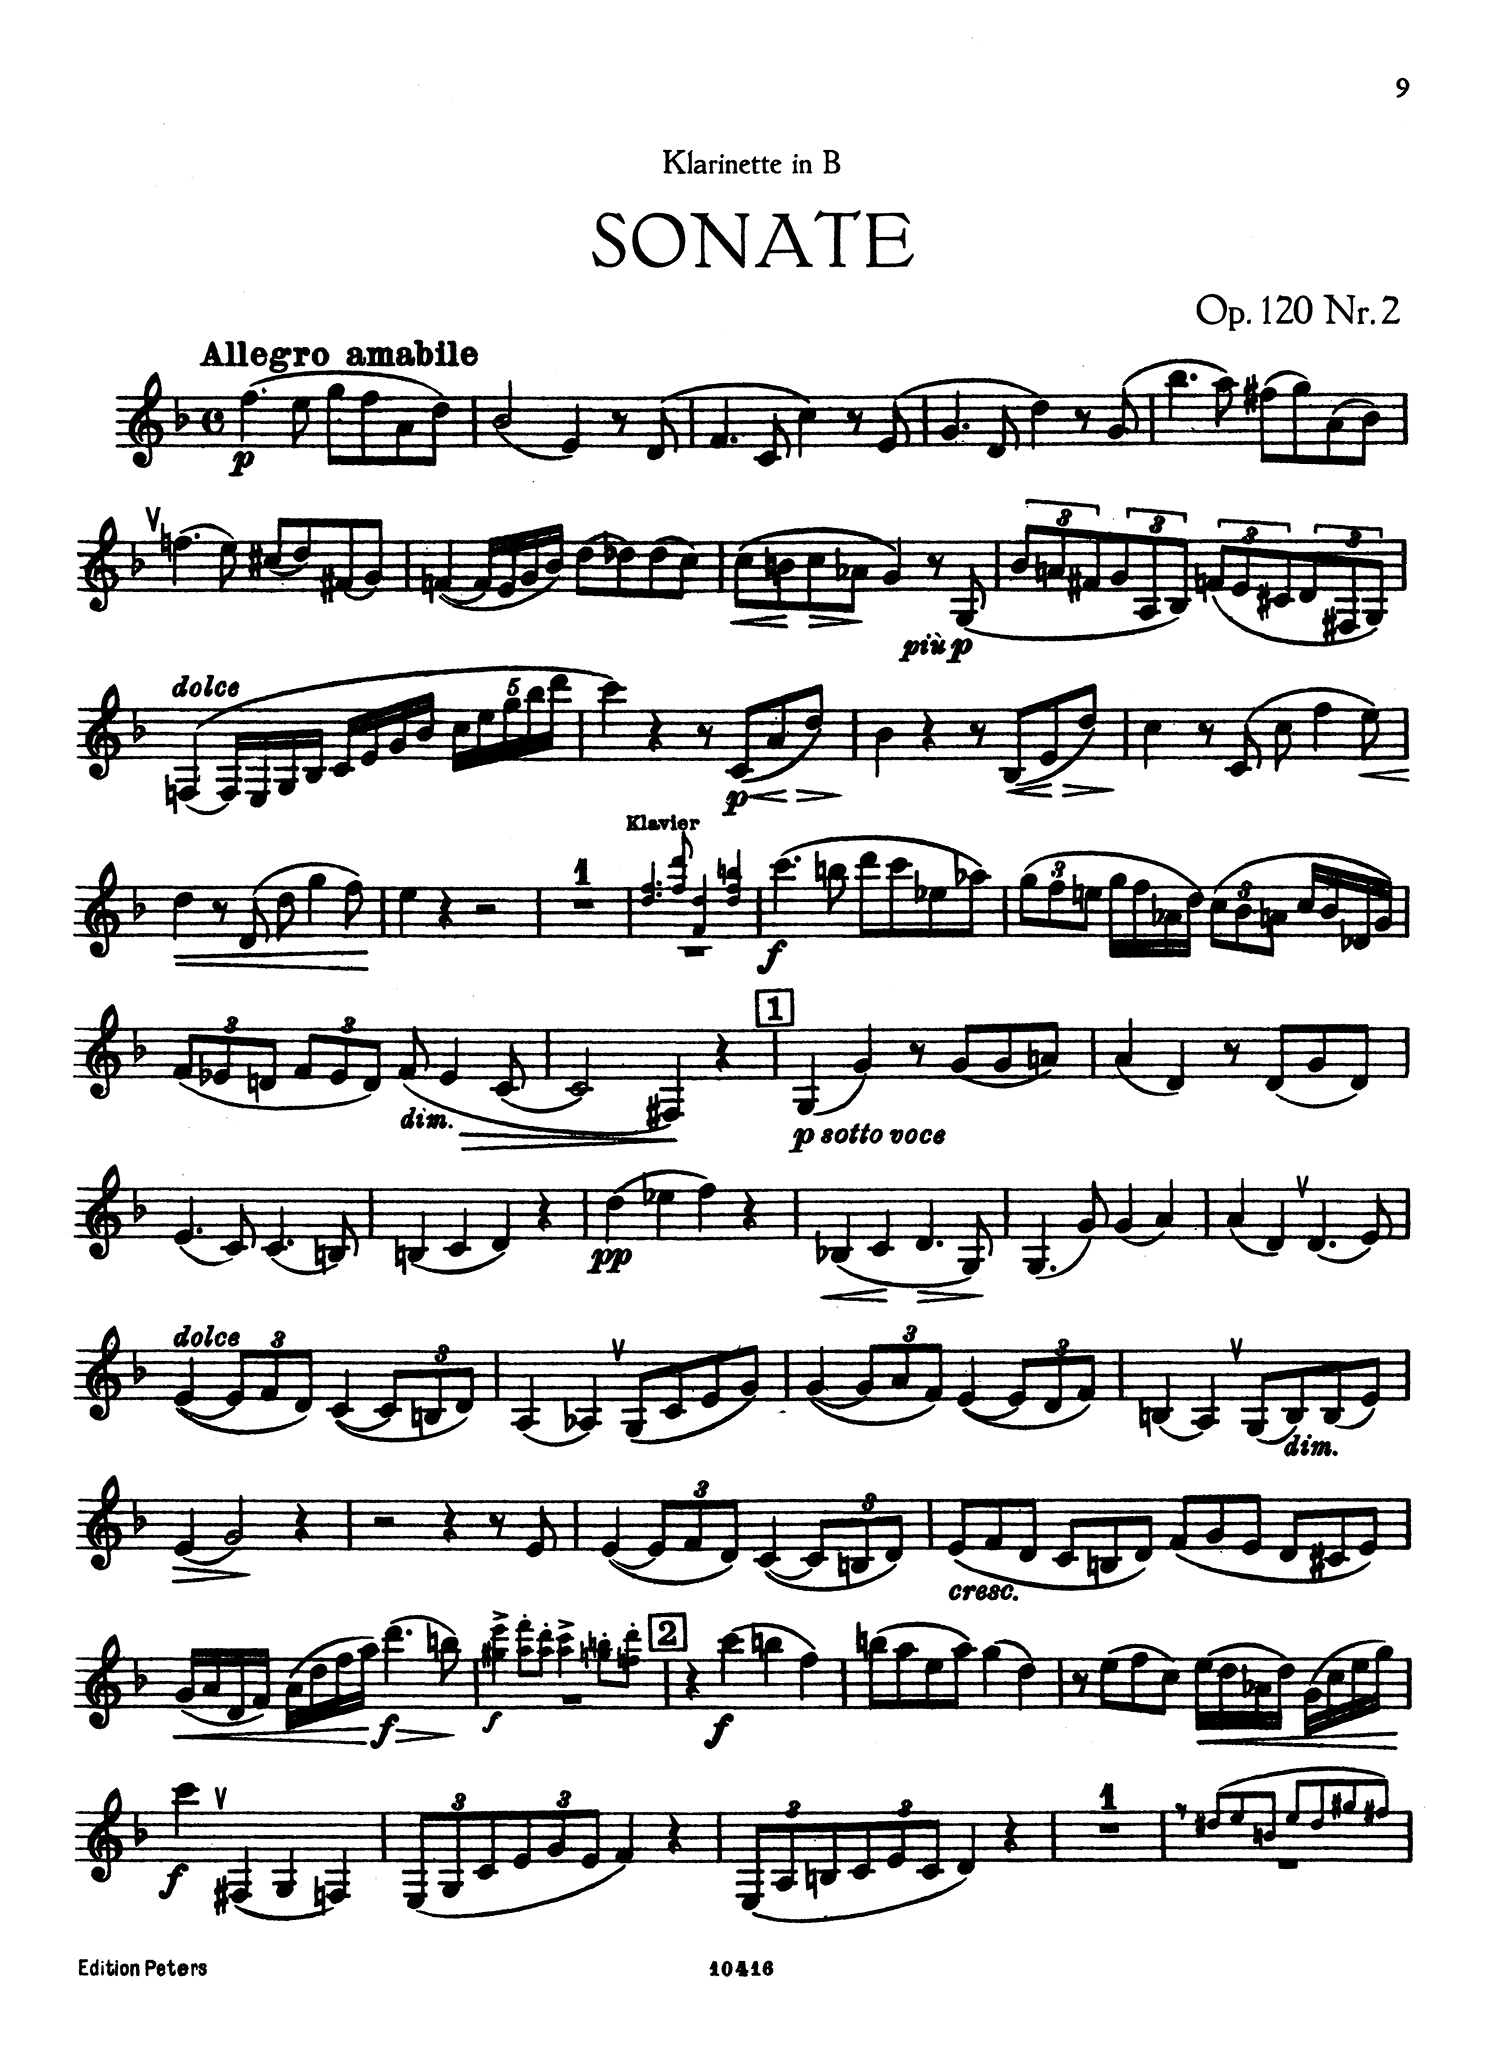 Sonata Op. 120 No. 1 Clarinet part